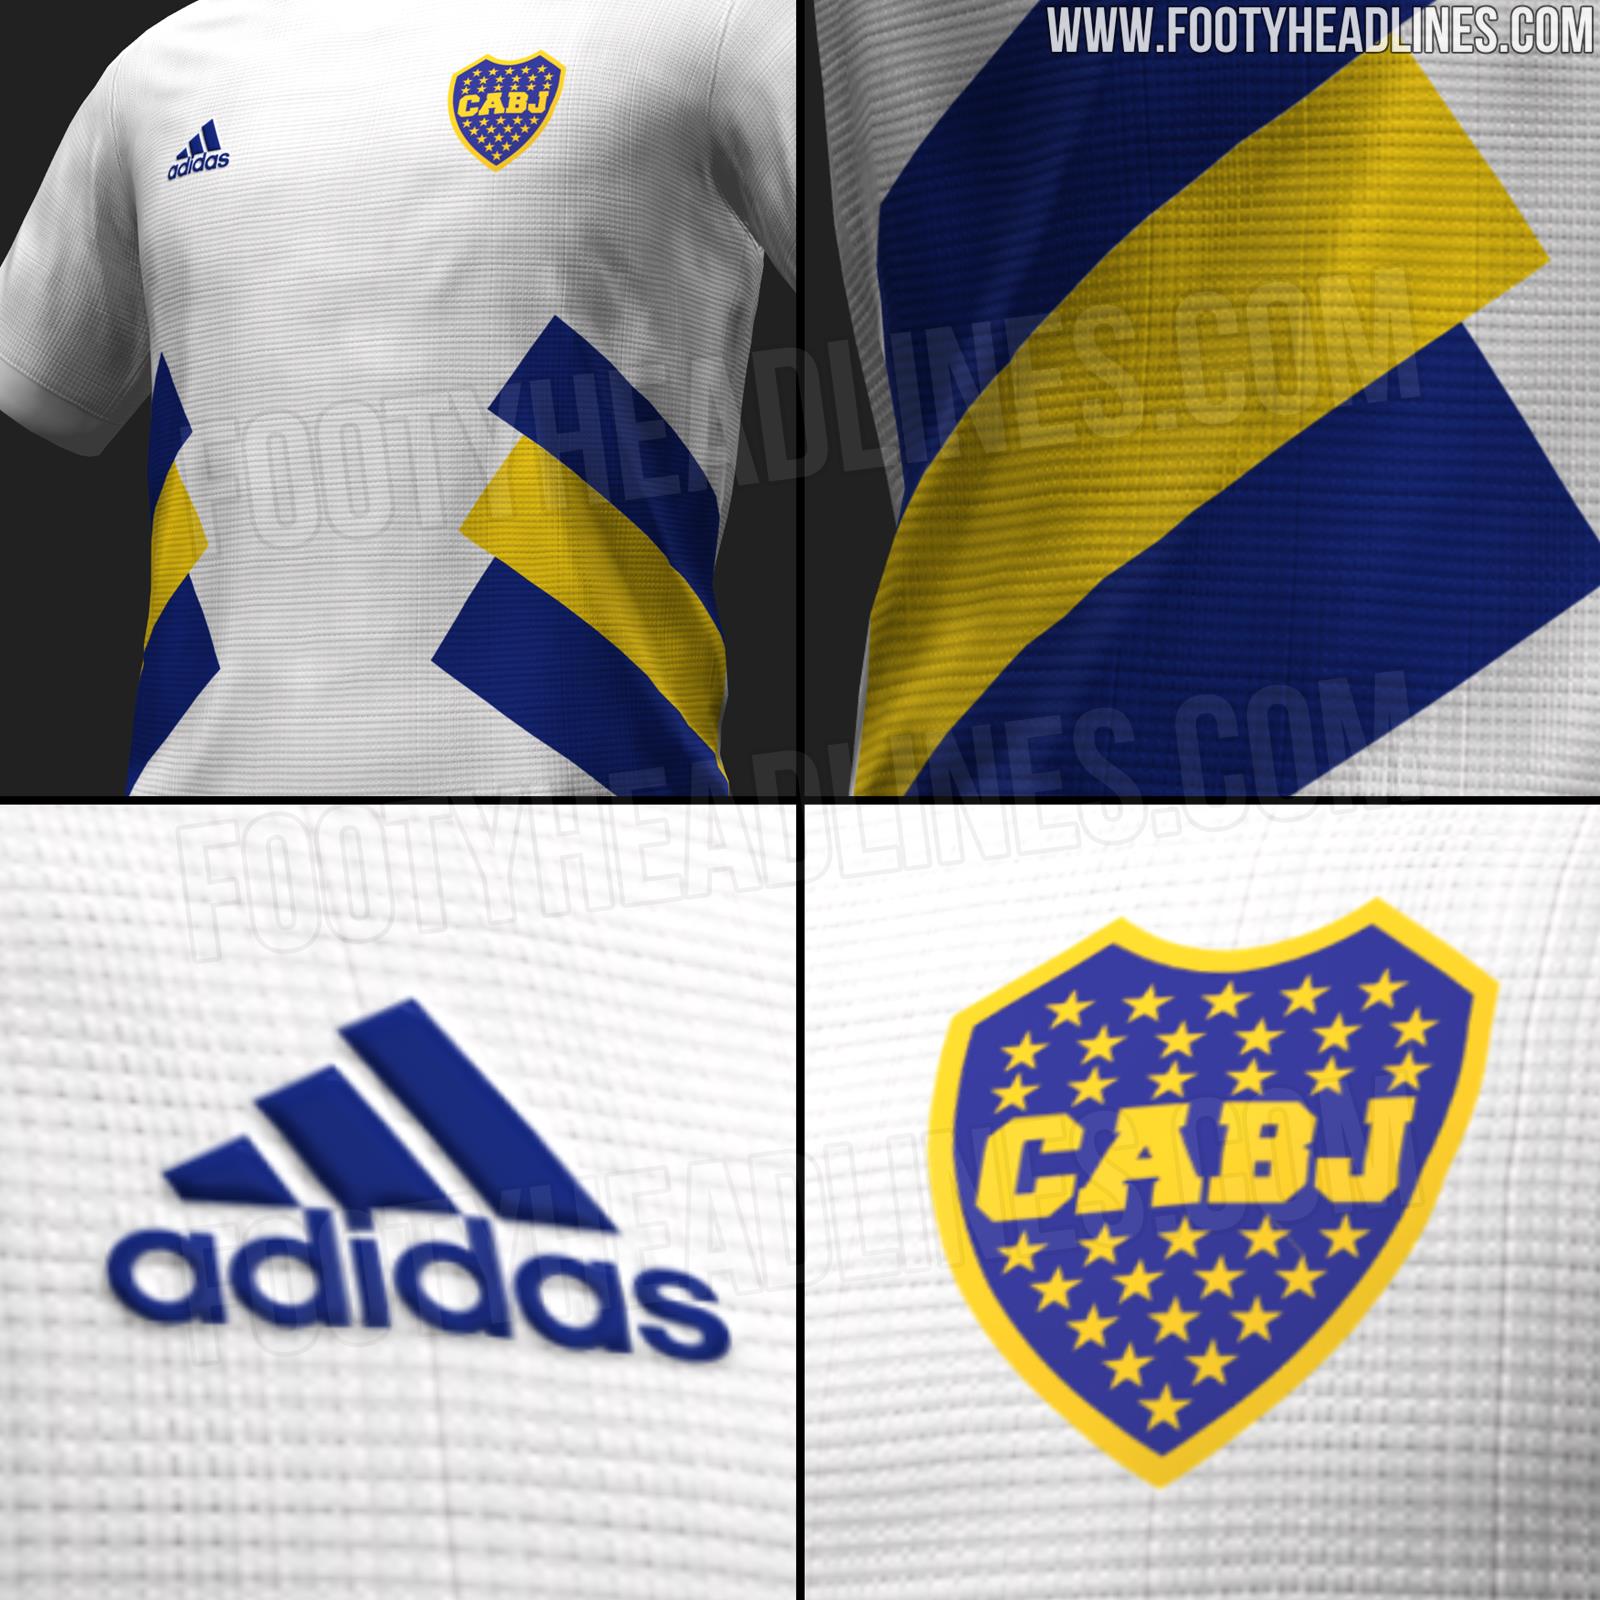 Adidas Originals Boca Juniors Collection Leaked - Footy Headlines